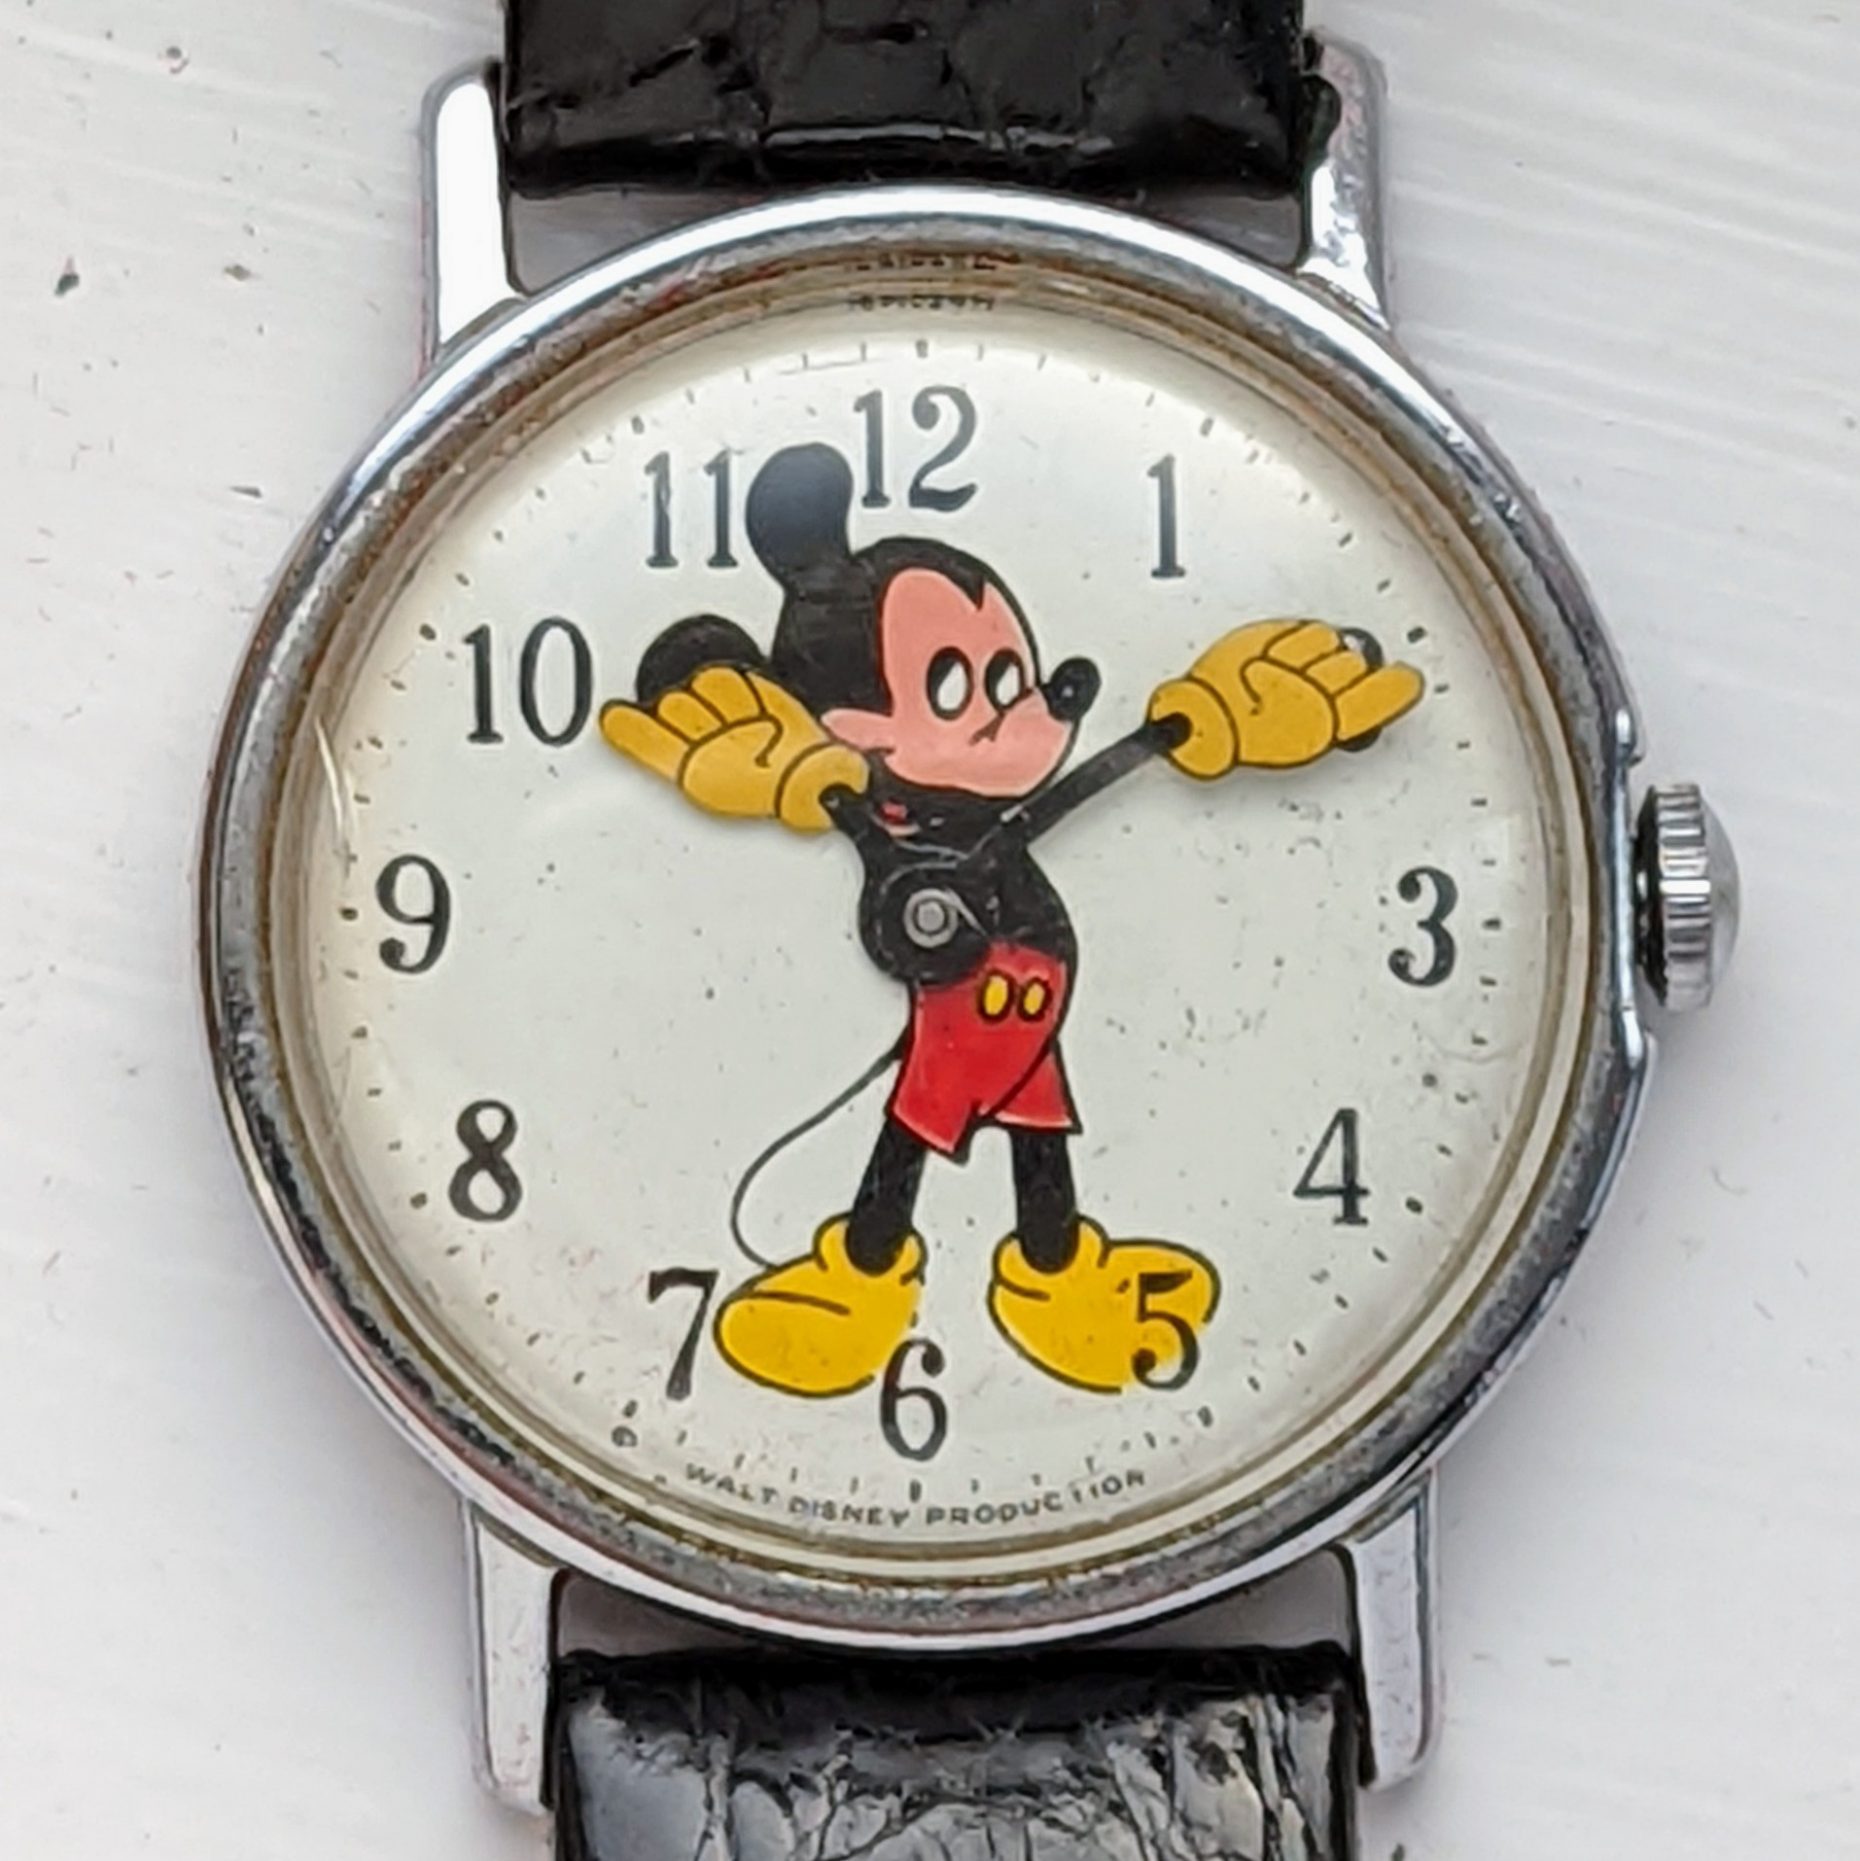 Timex Mickey Mouse Watch 16010 2471 [1971] Mercury / Fun Timer